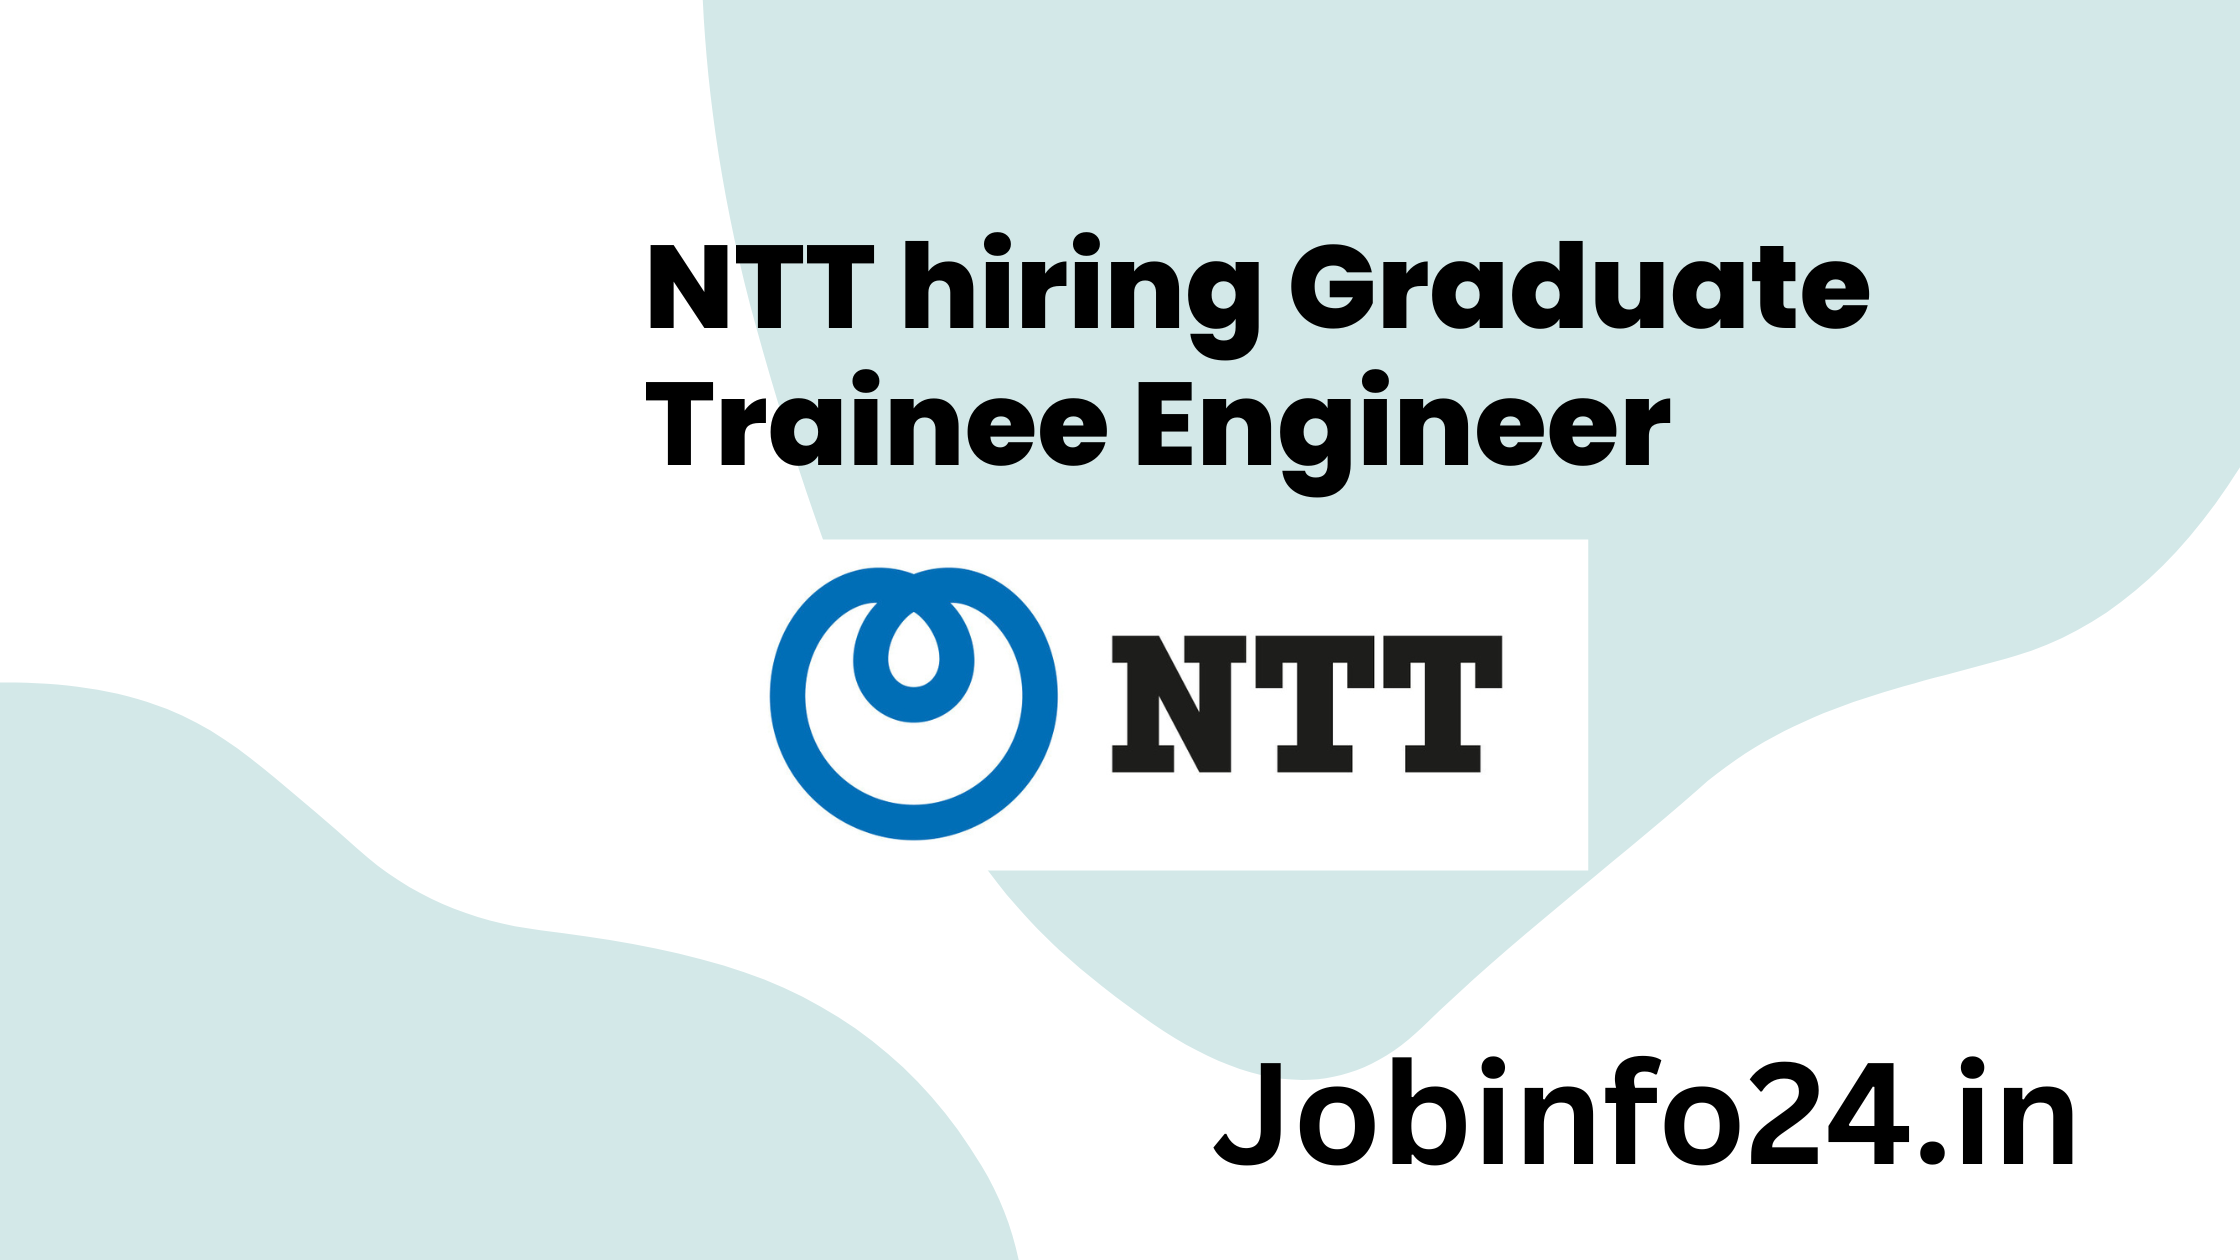 NTT hiring Graduate Trainee Engineer